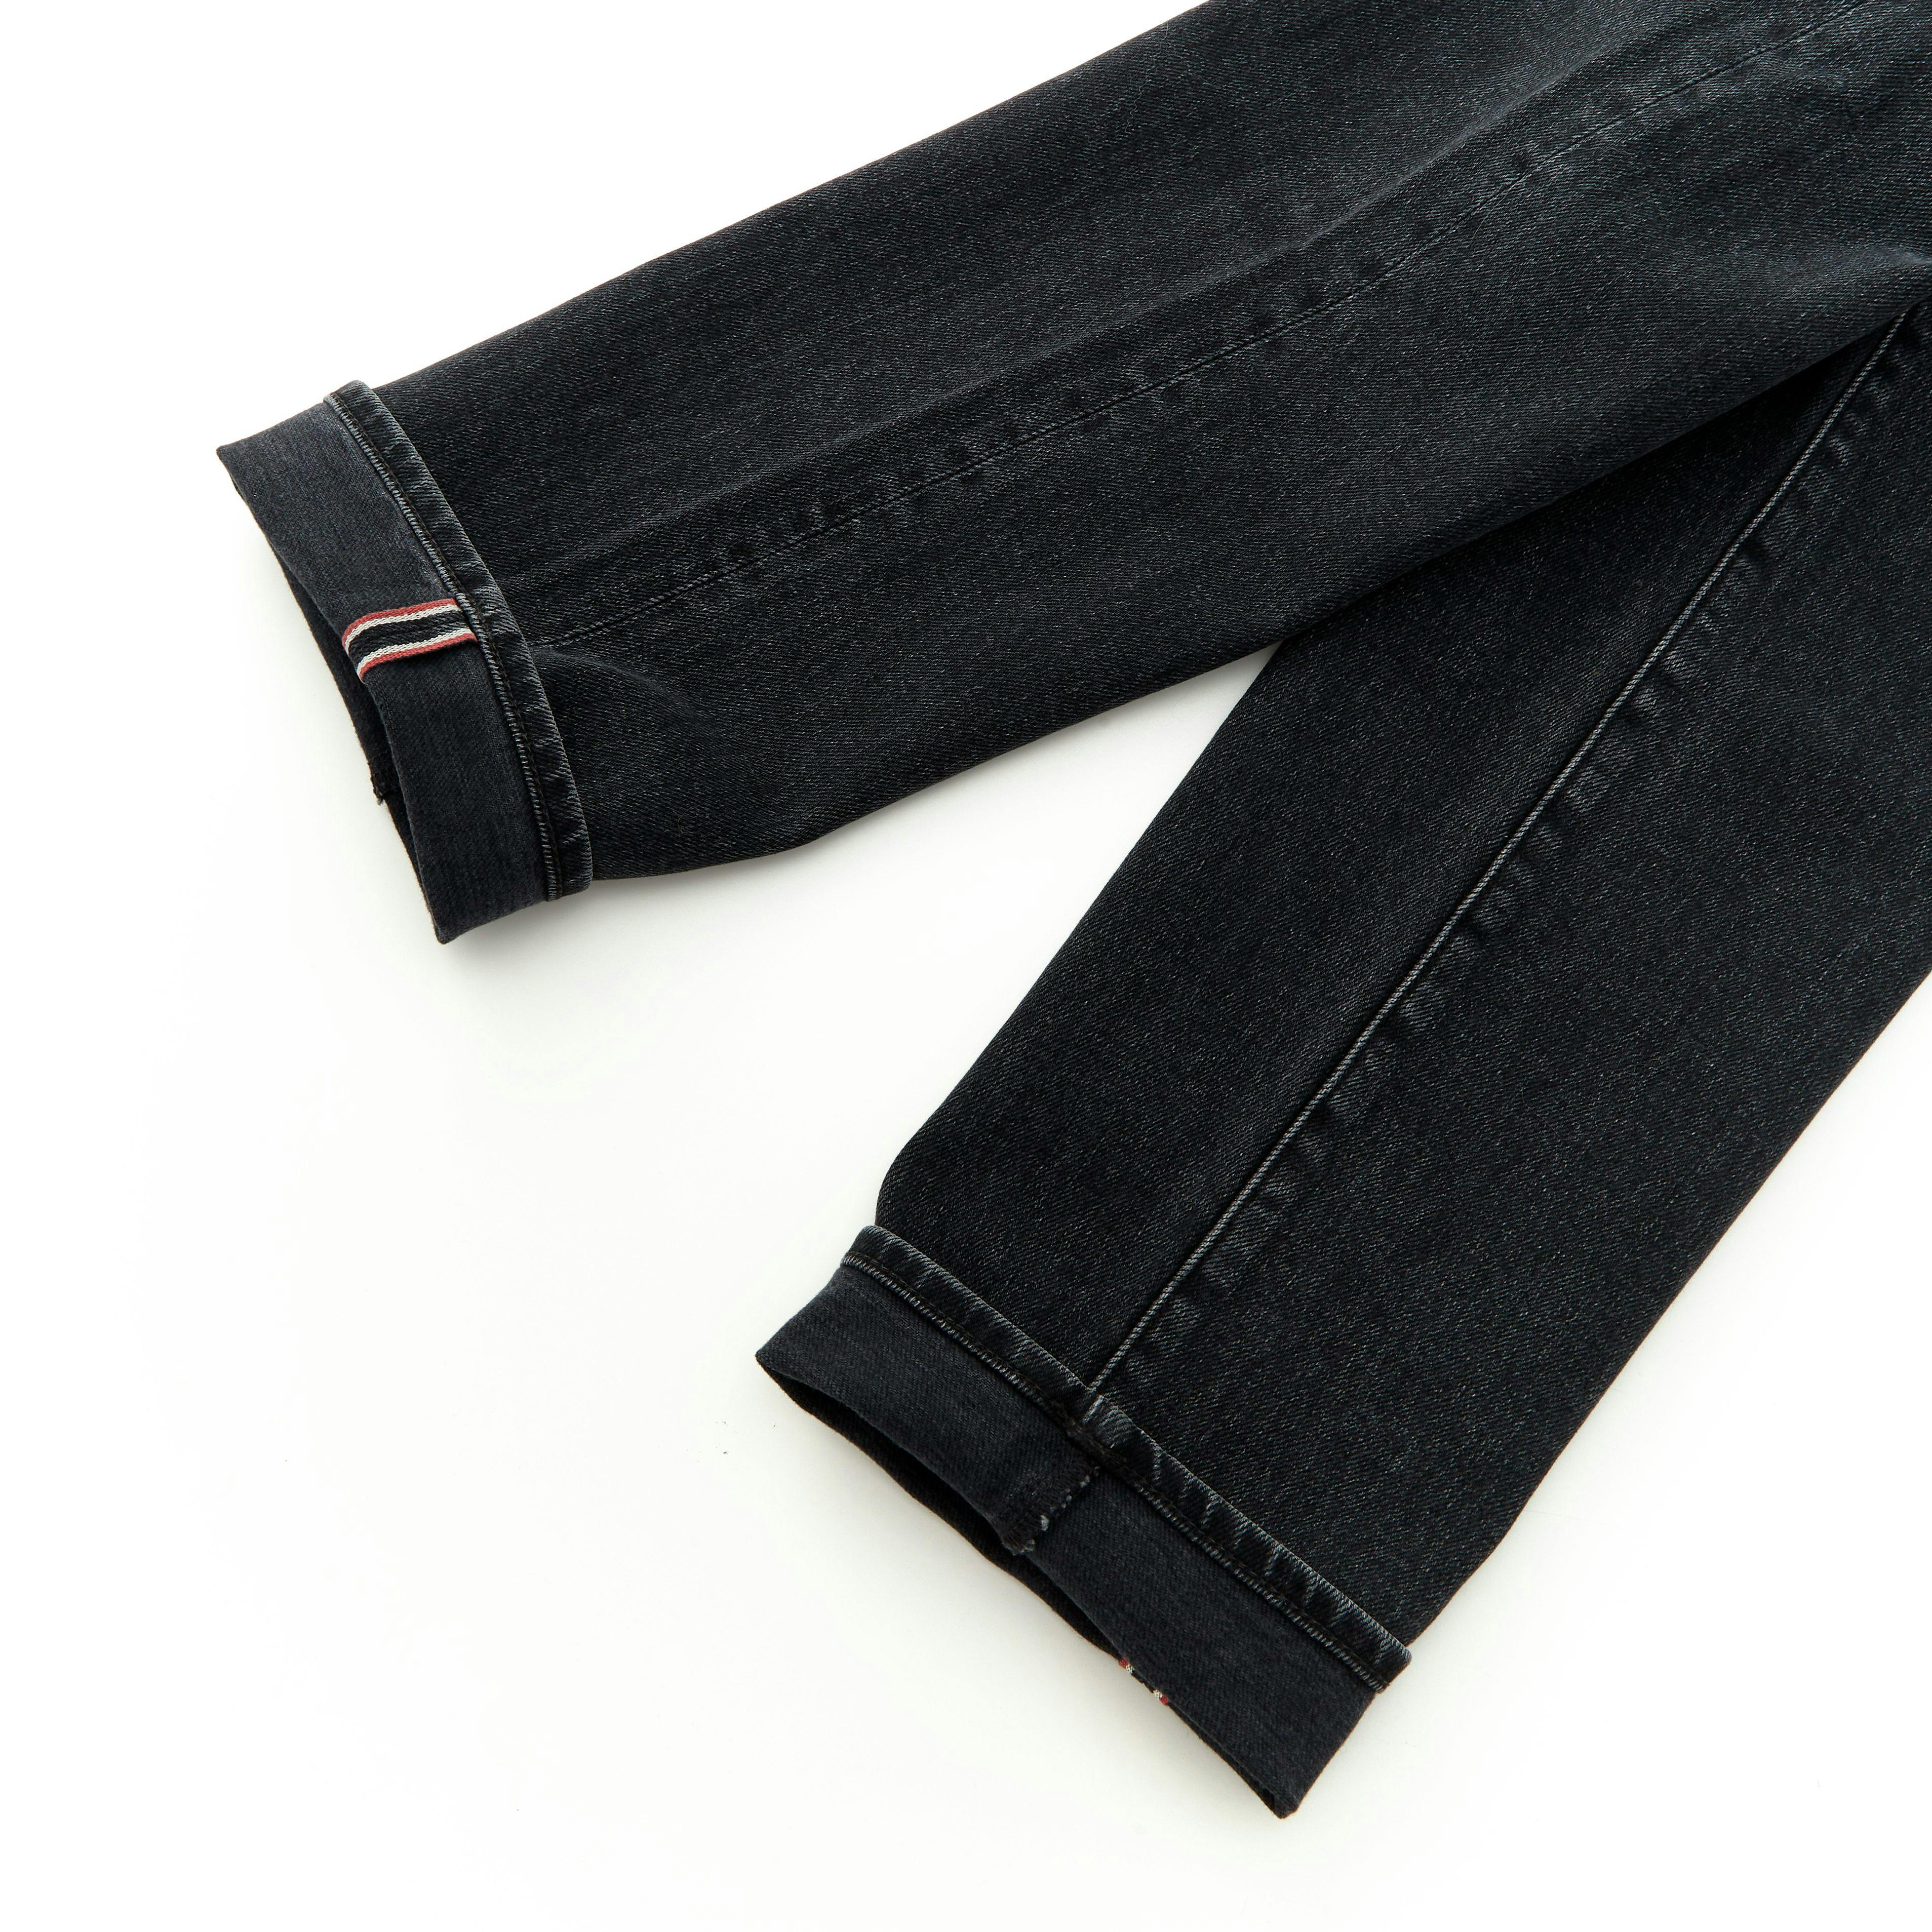 The Black Denim Jeans